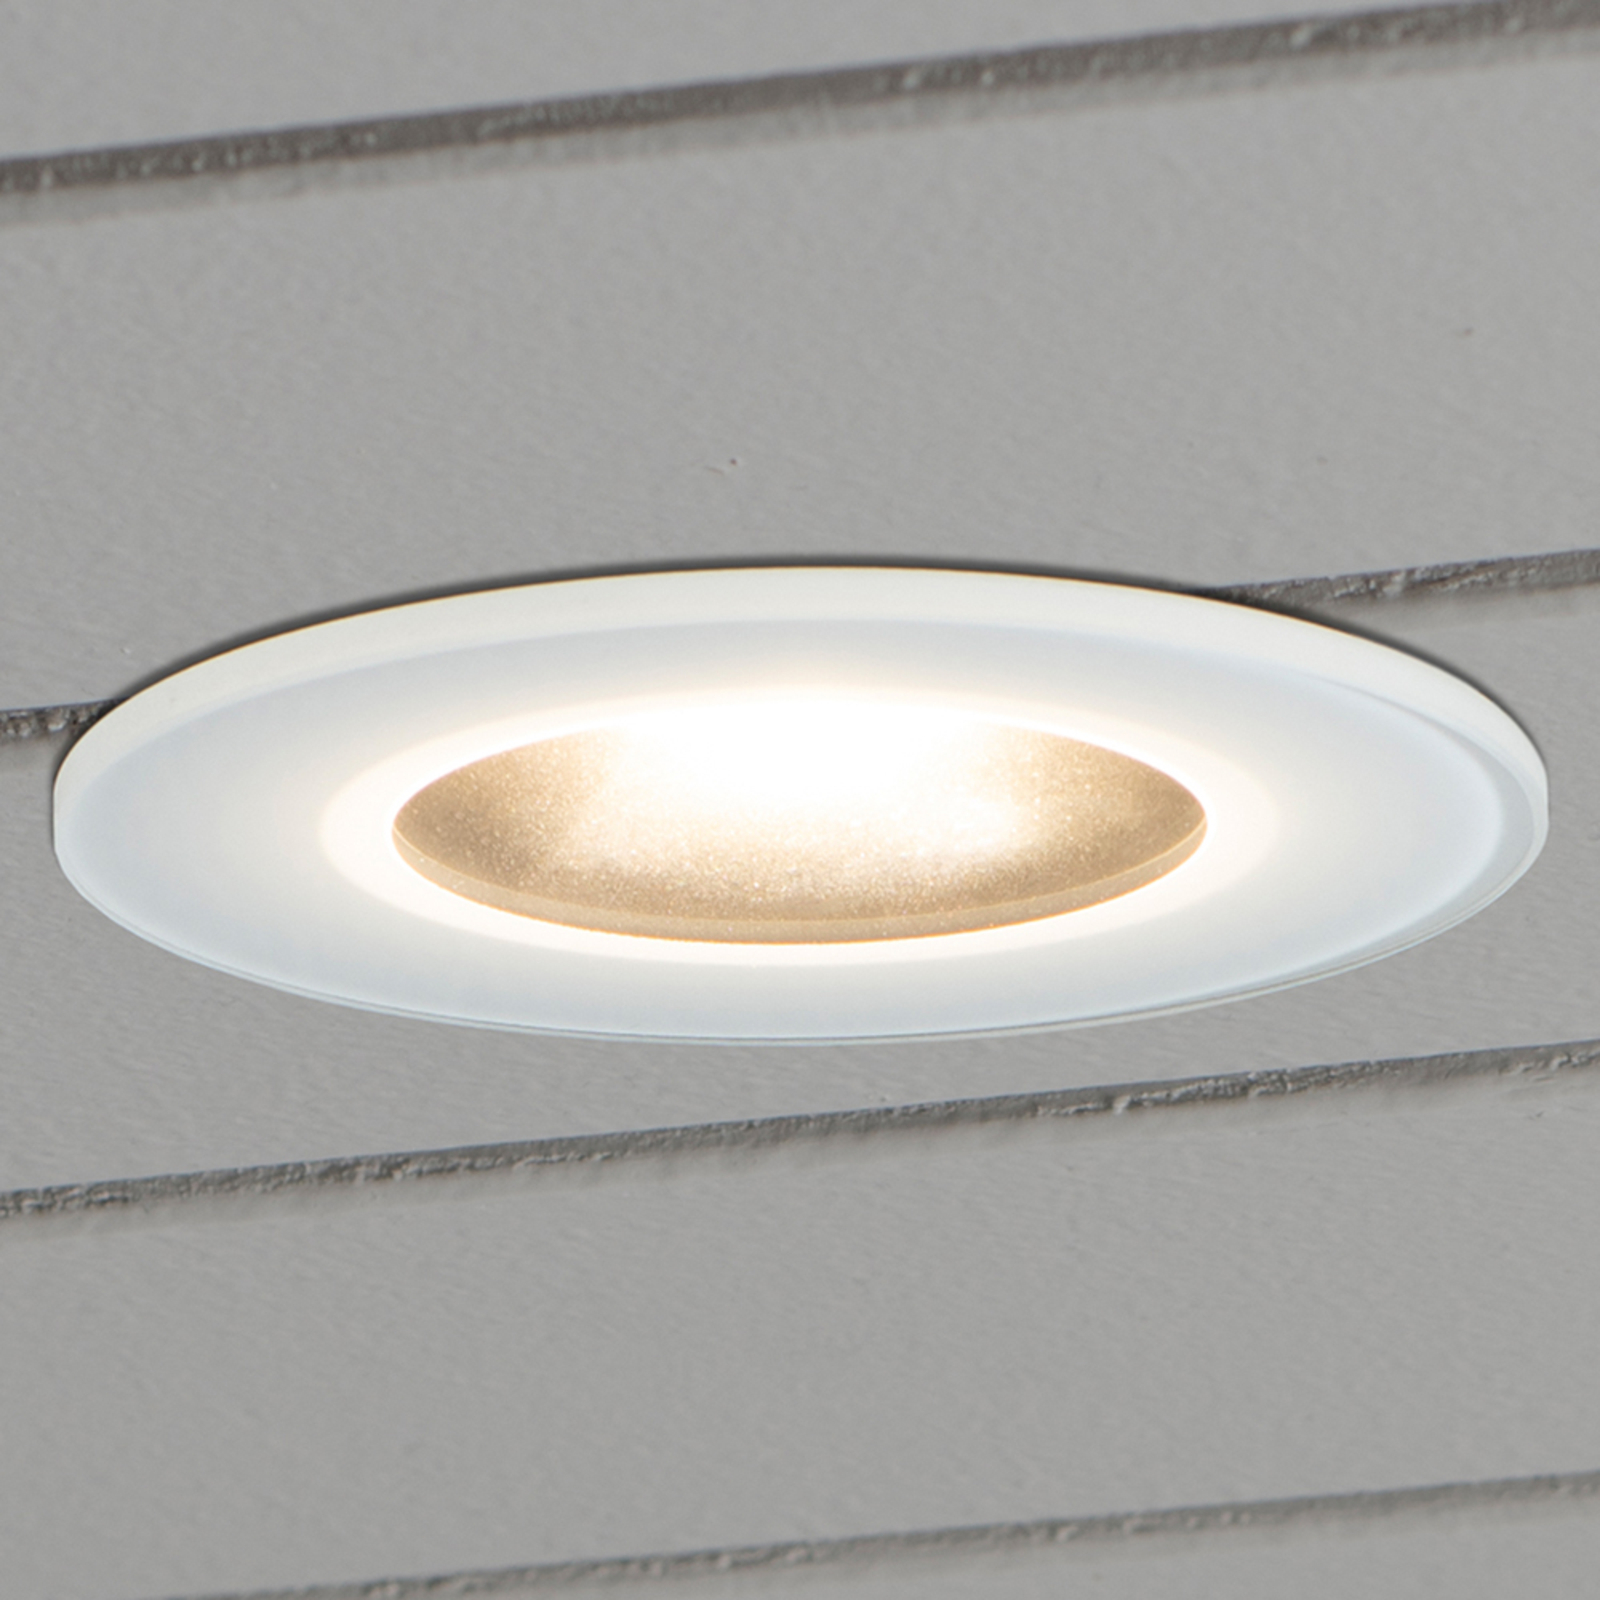 Verhandeling Jong hout LED inbouwlamp 7875, plafond buiten | Lampen24.be